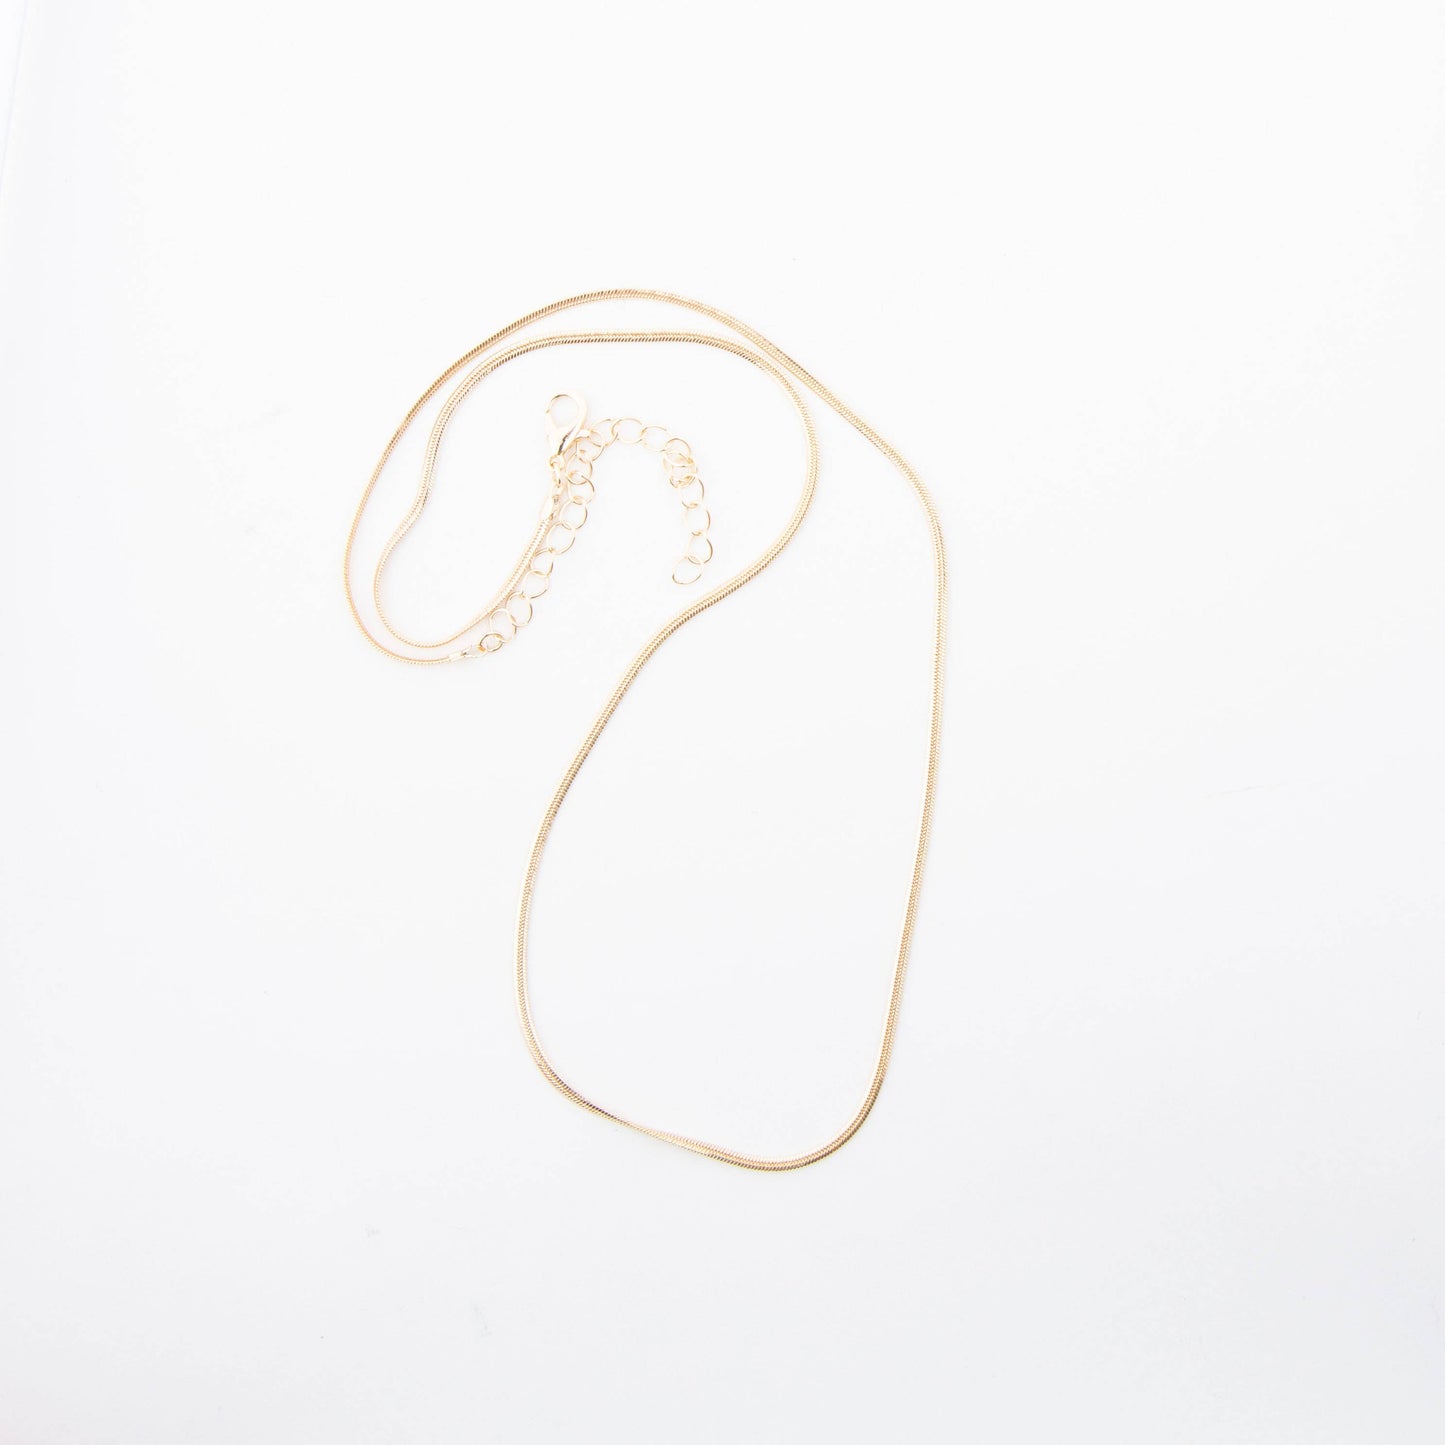 Silver 18" Herringbone Chain Necklace